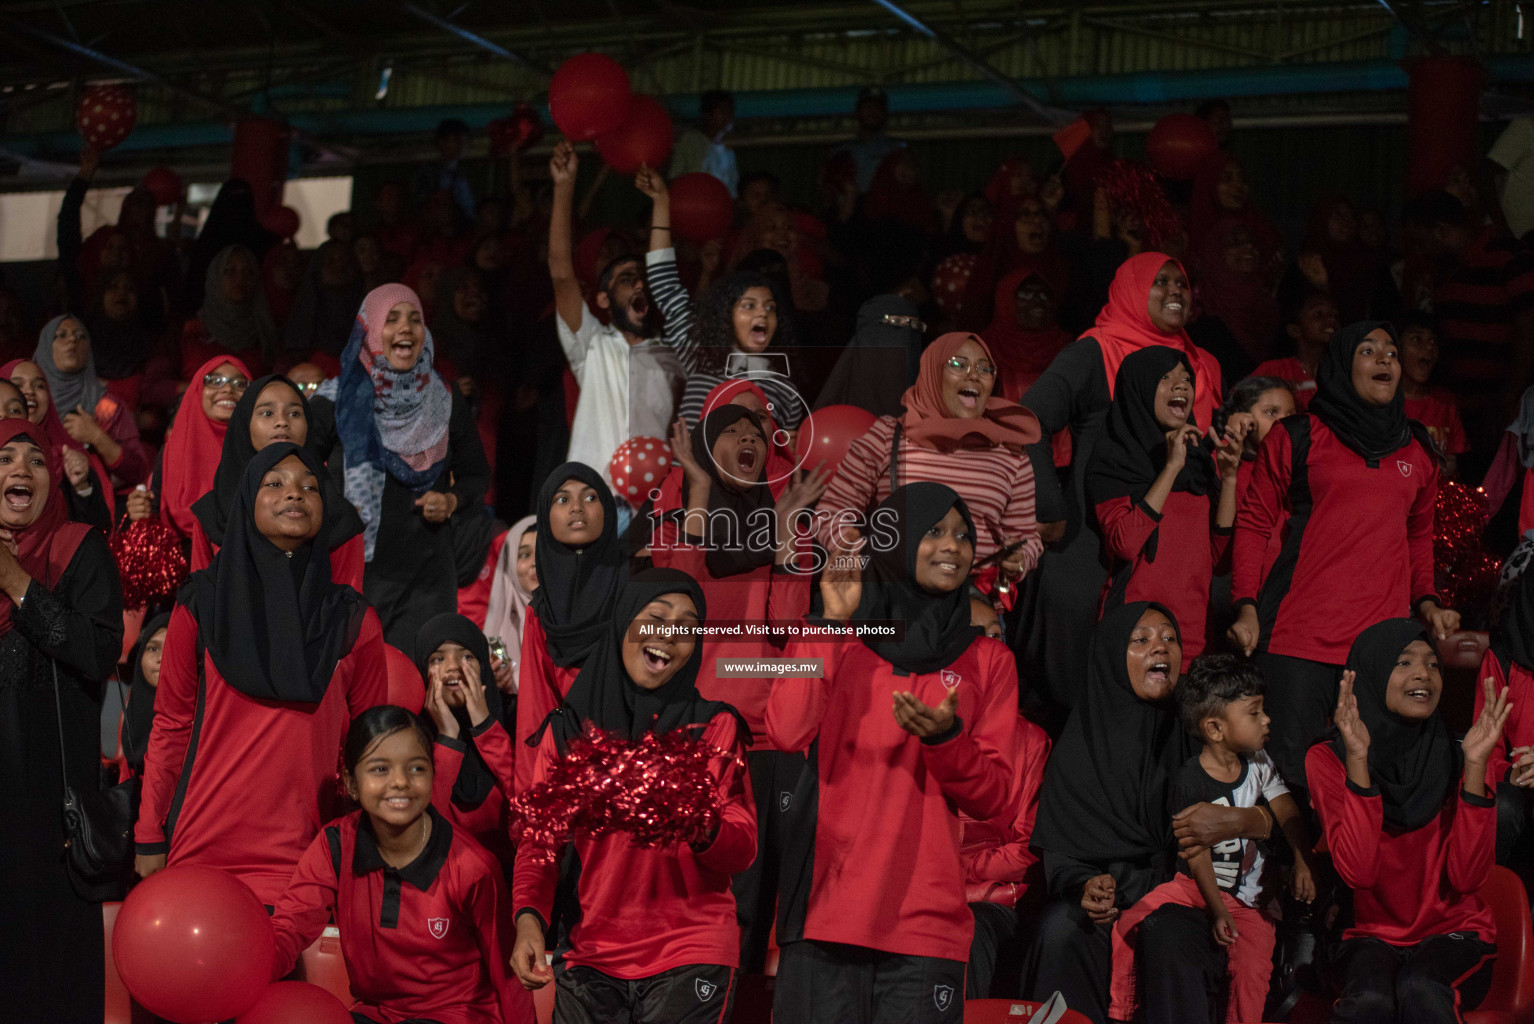 IH.EDU.CENTRE vs Ghaazee School in Final of MAMEN Inter School Football Tournament 2019 (U13) in Male, Maldives on 22nd April 2019 Photos: Suadh Abdul Sattar / Hassan Simah /images.mv